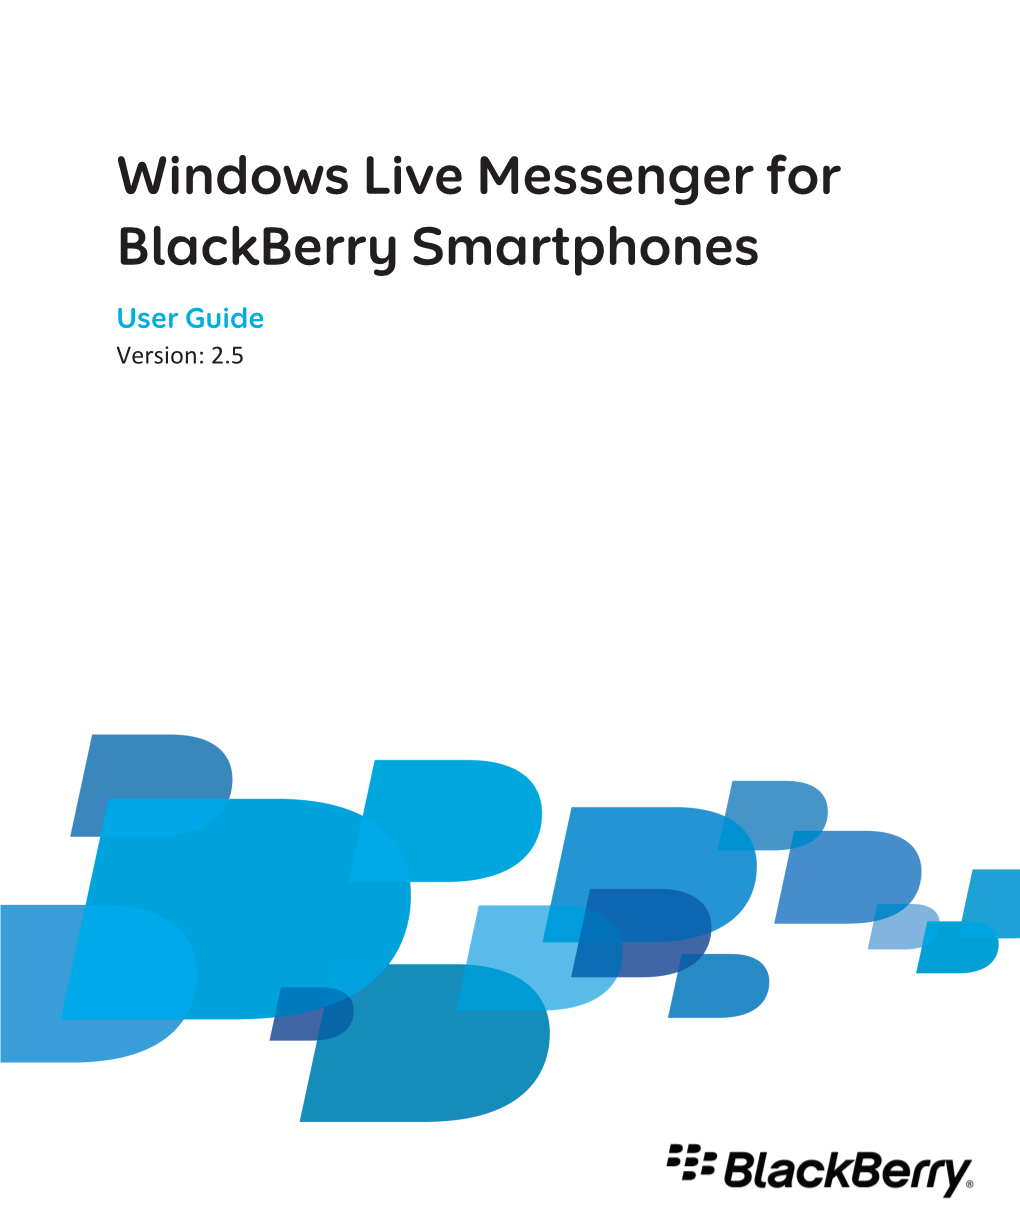 Windows Live Messenger for Blackberry Smartphones User Guide Version: 2.5 SWDT397021-561111-0512084611-001 Contents Basics